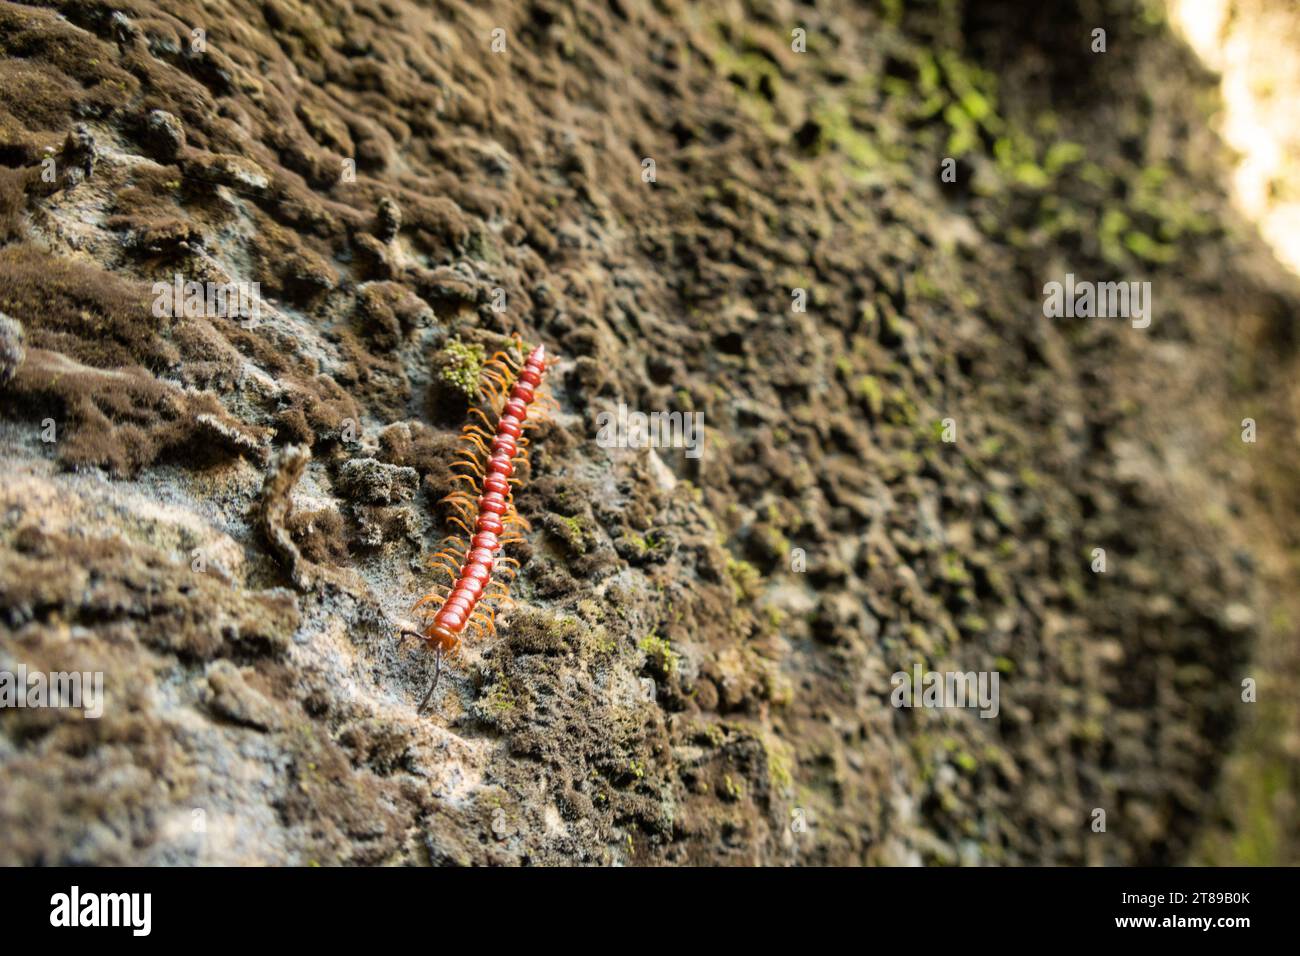 Red millipede (polydesmid, strigamia, chelodesmidae) in Sumatra, Indonesia Stock Photo